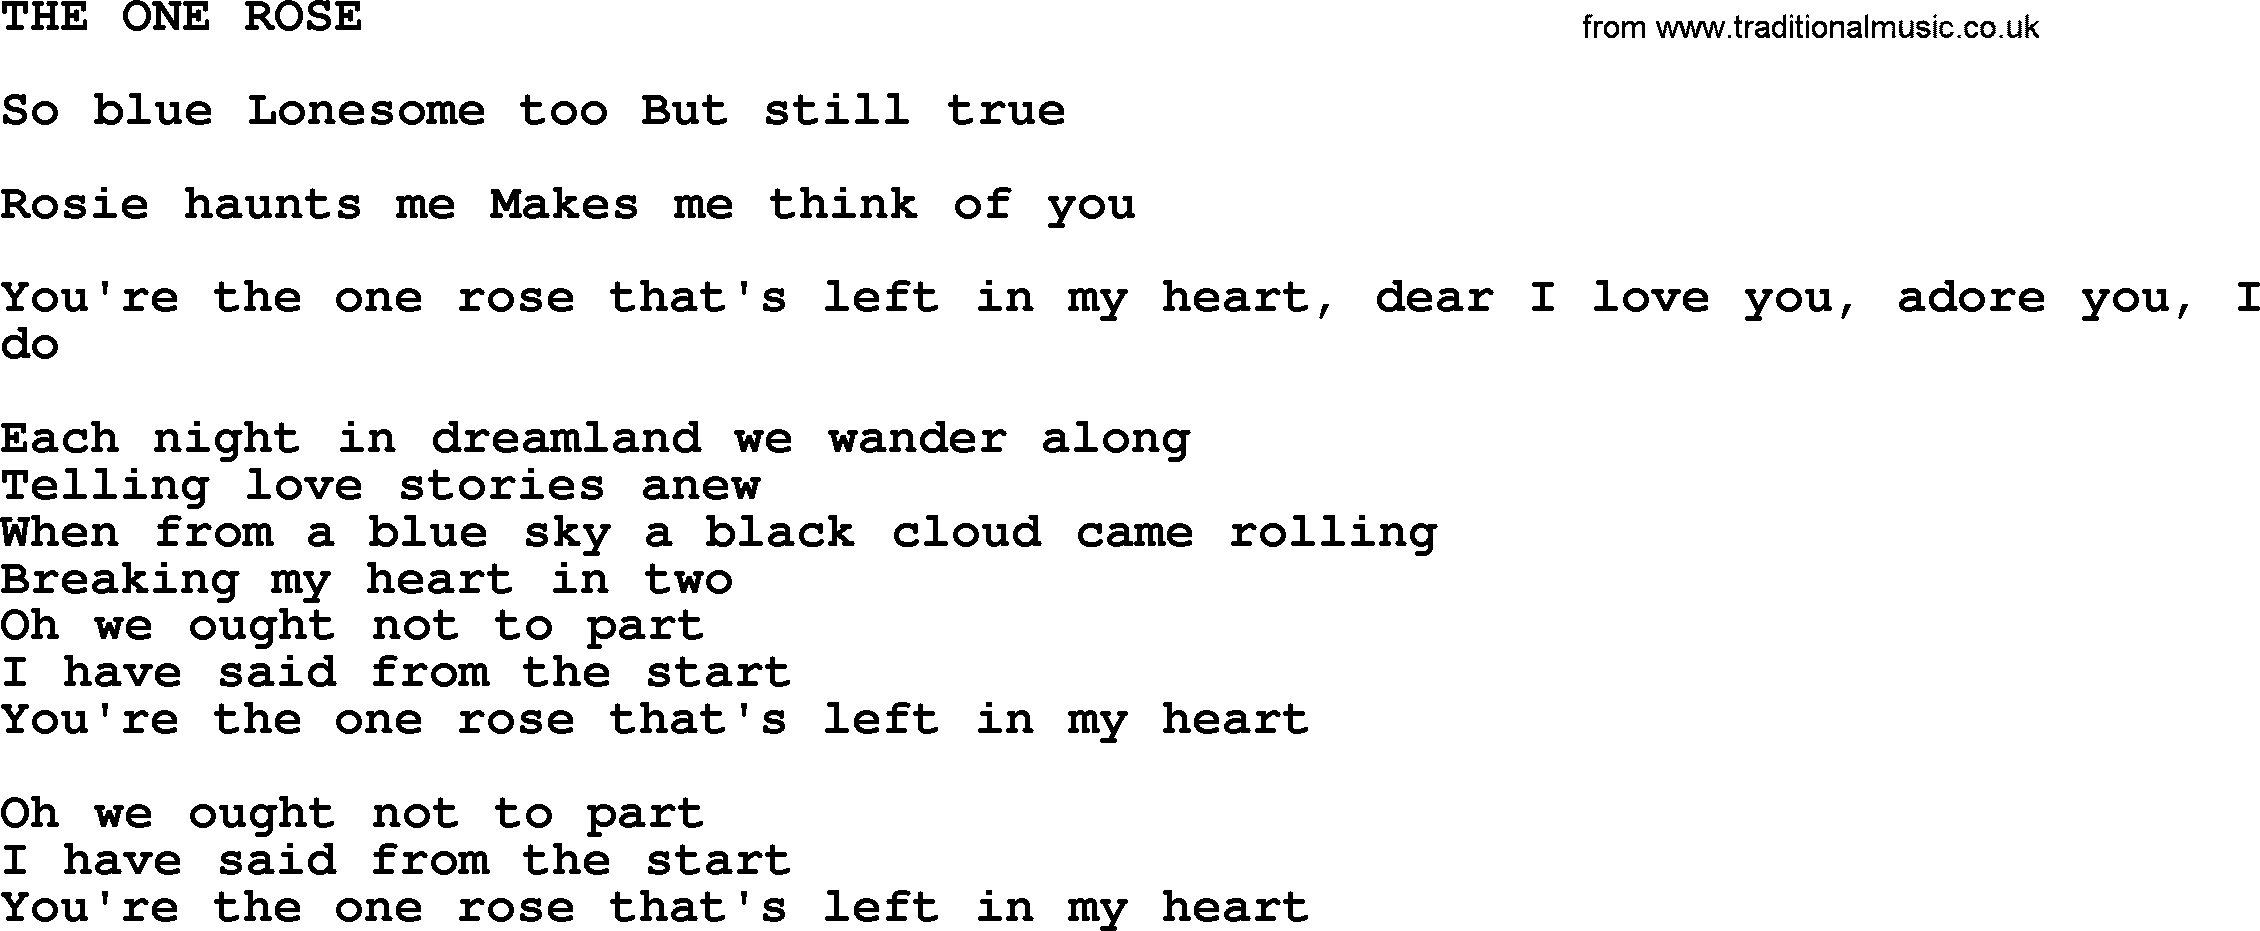 Johnny Cash song The One Rose.txt lyrics